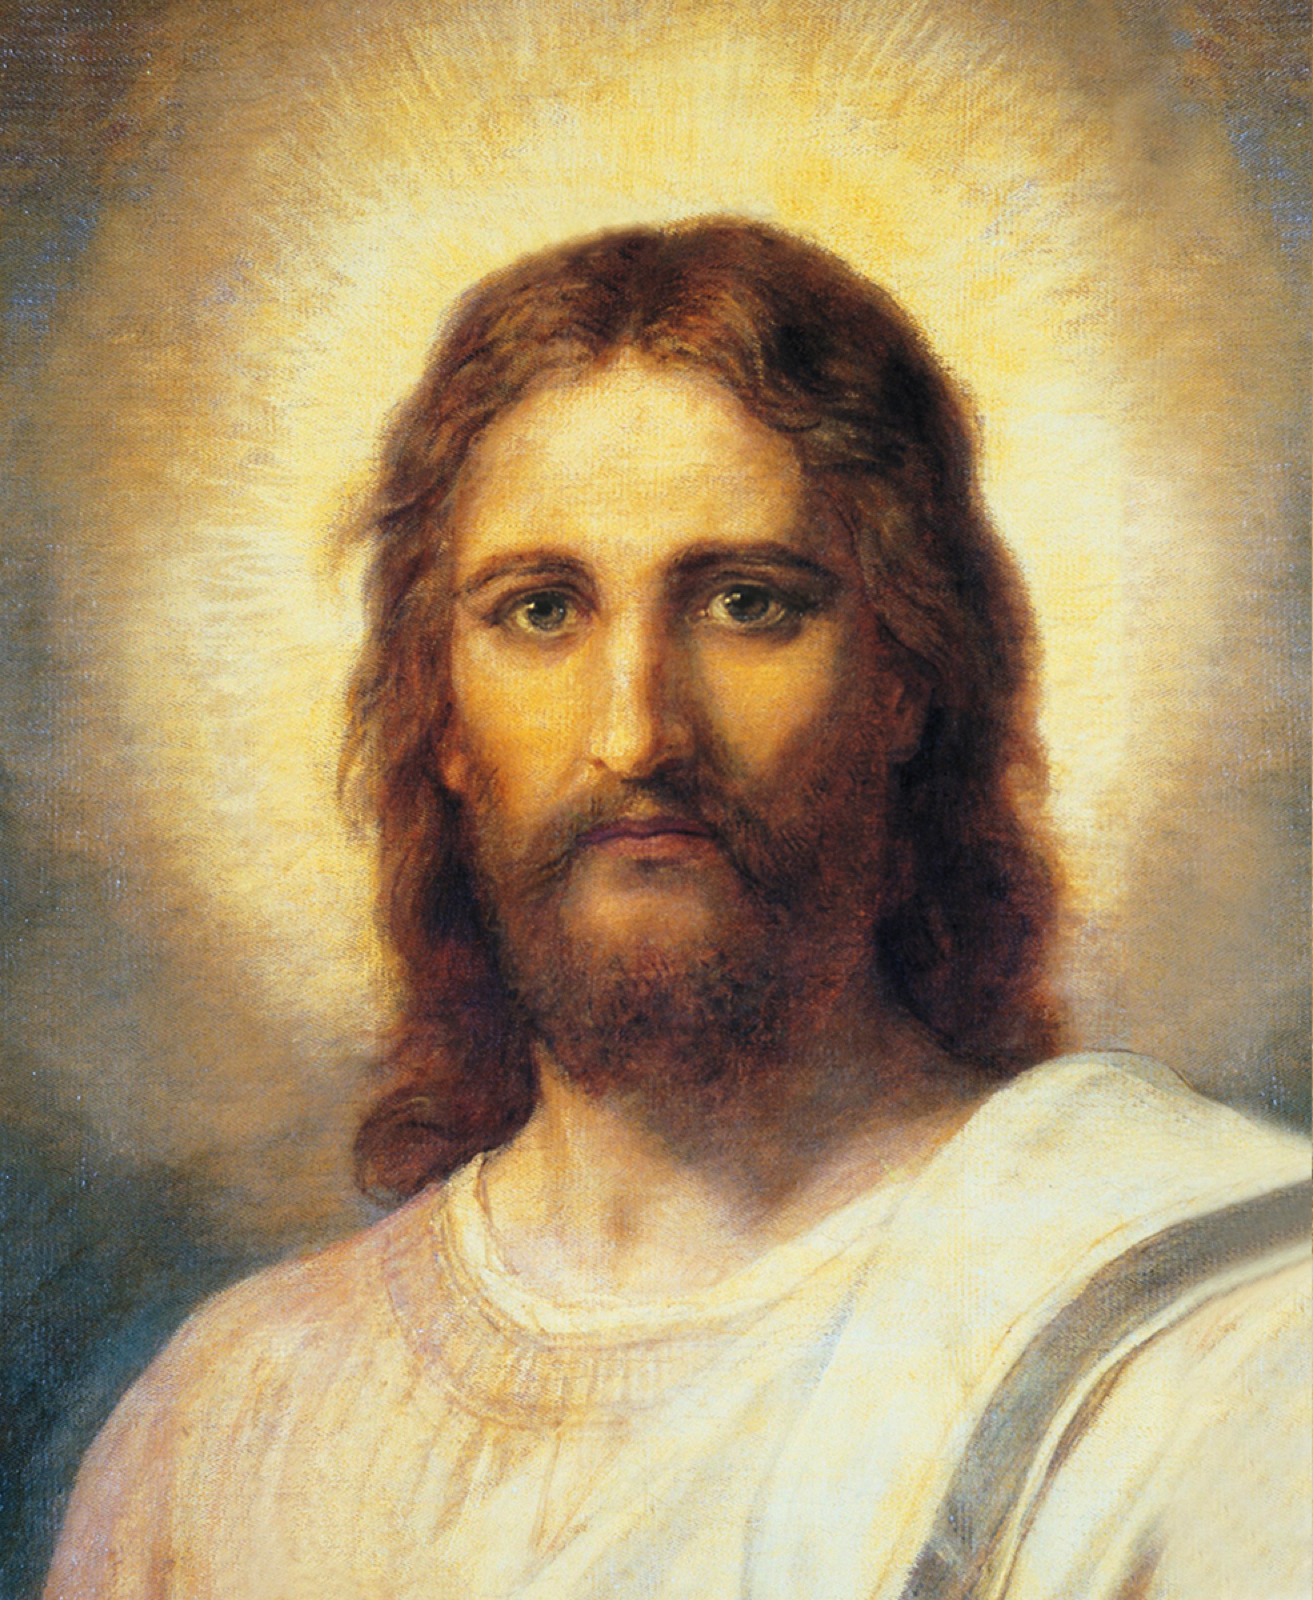 Jesus Christ campaign-hero-image